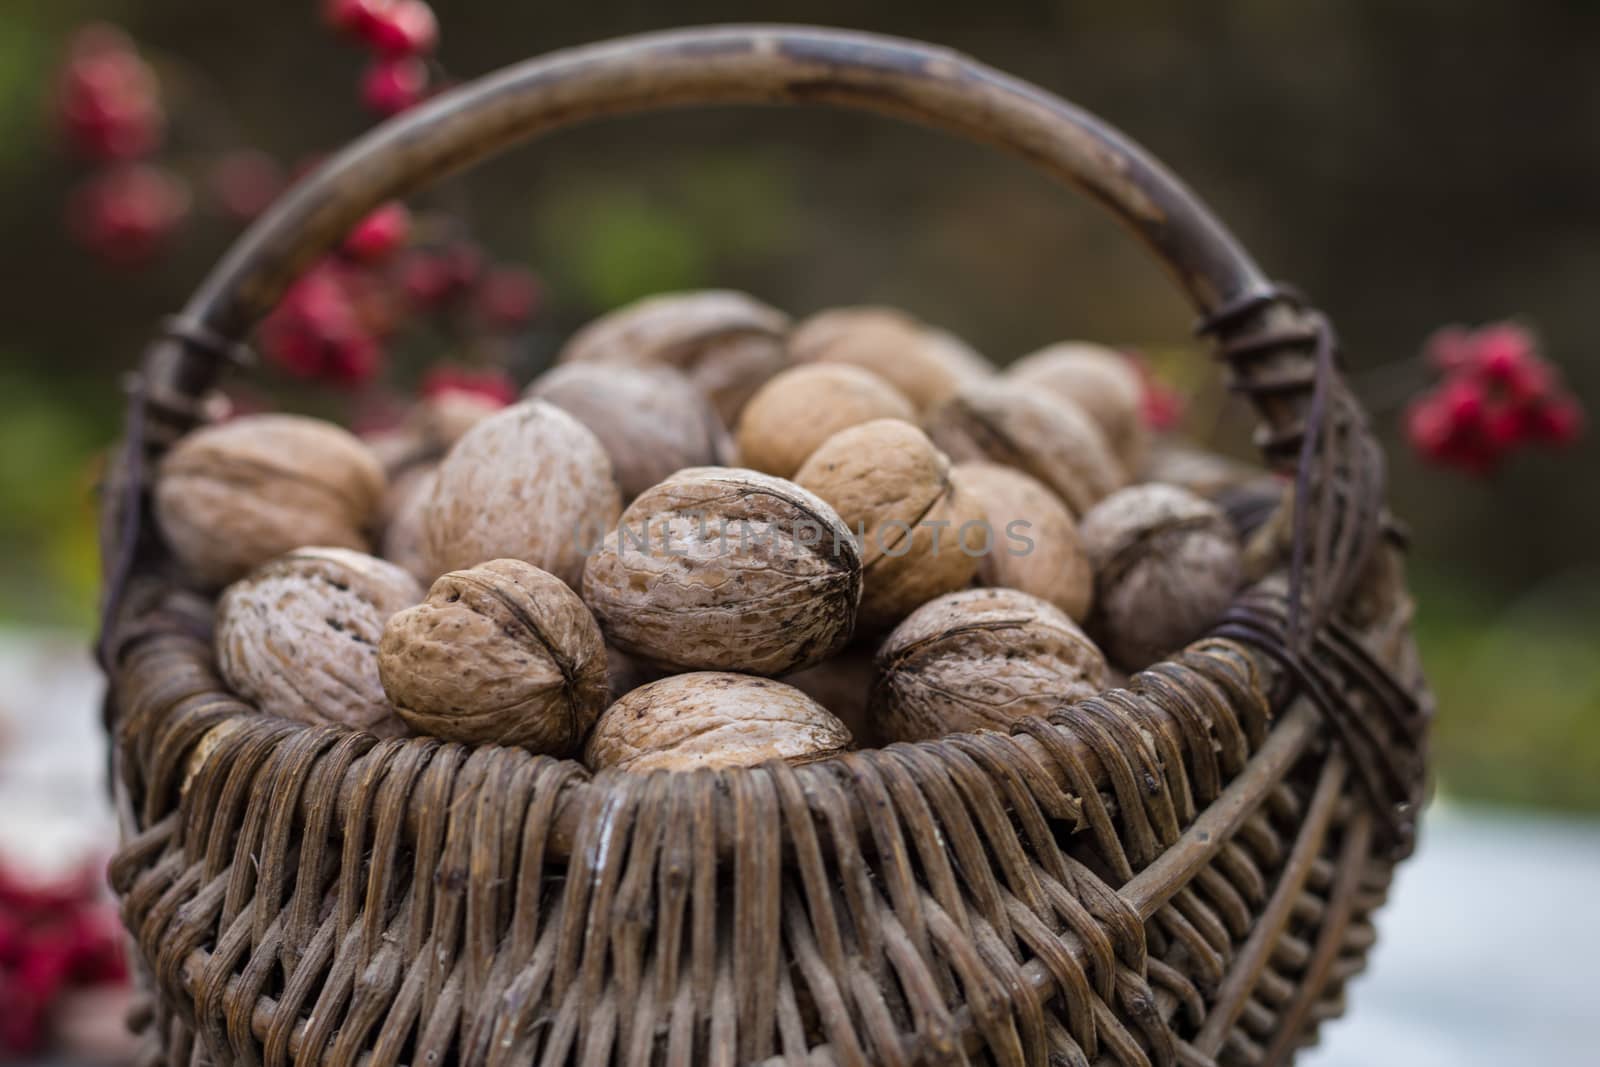 Wicker baskets containing walnuts